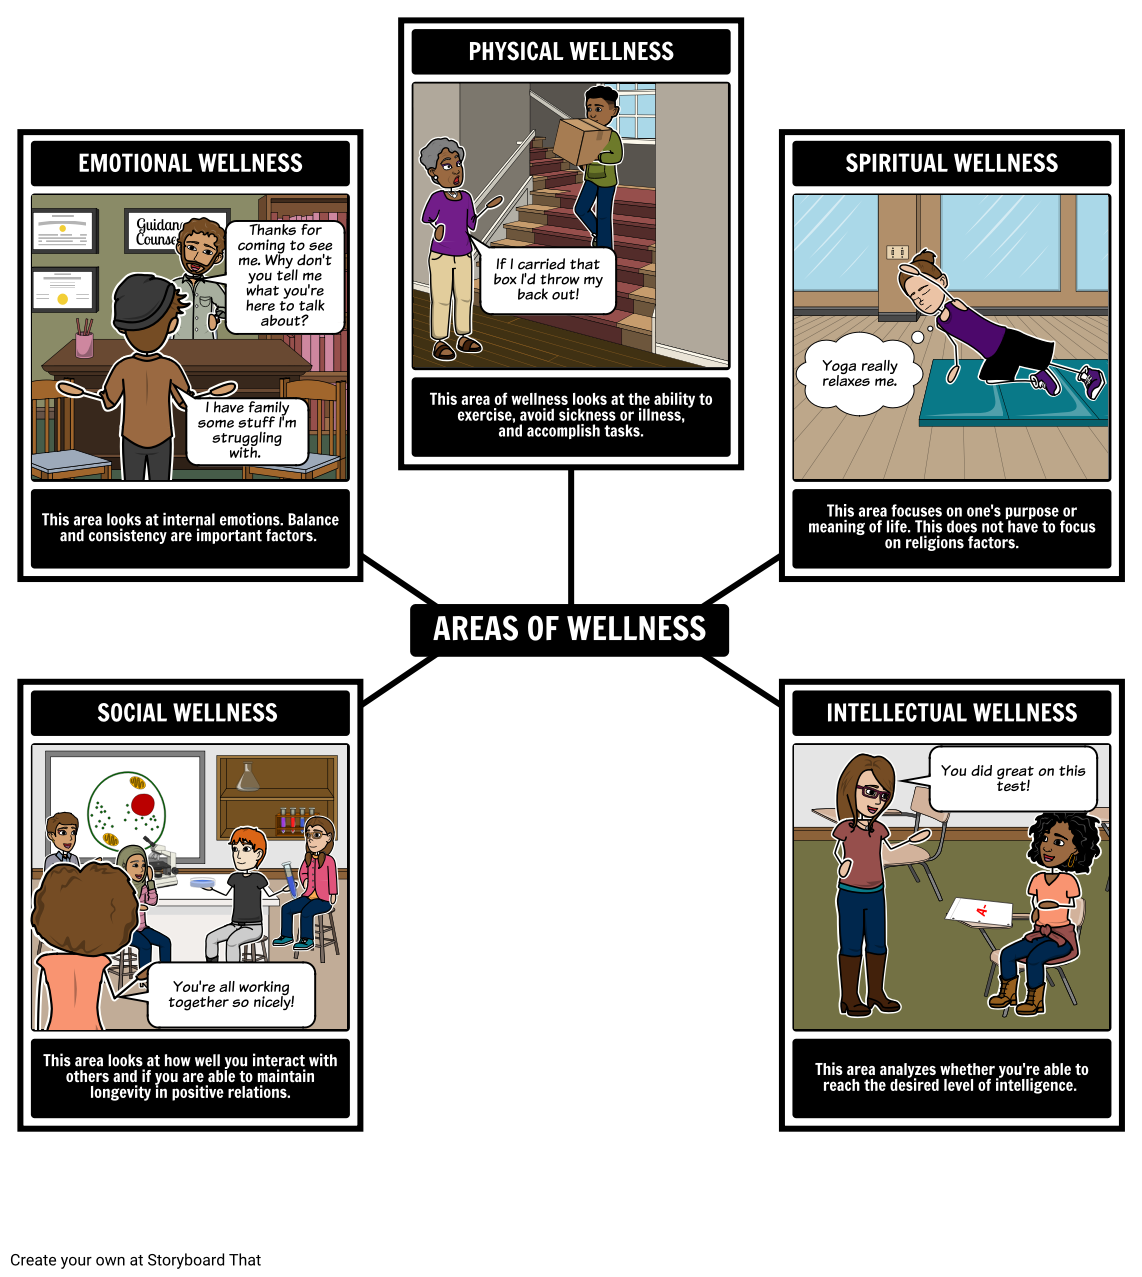 Areas of Wellness